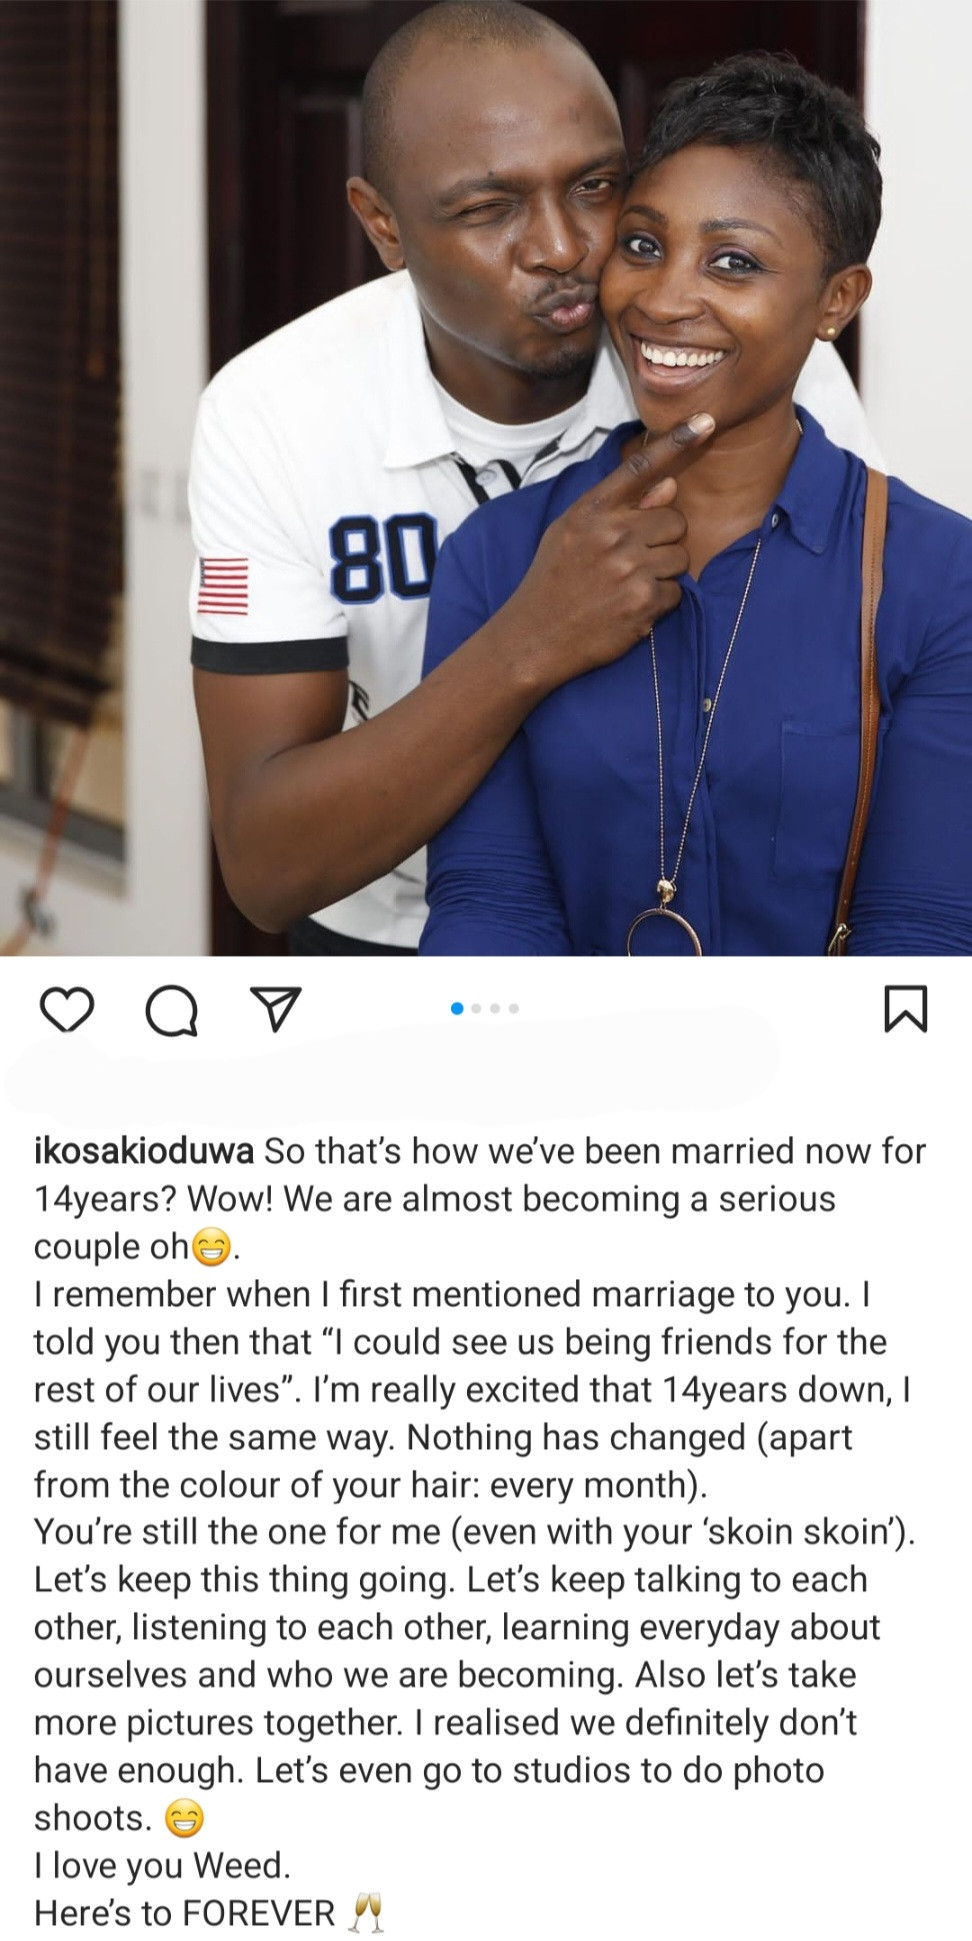 IK Osakioduwa And Wife Celebrate 14th Wedding Anniversary 